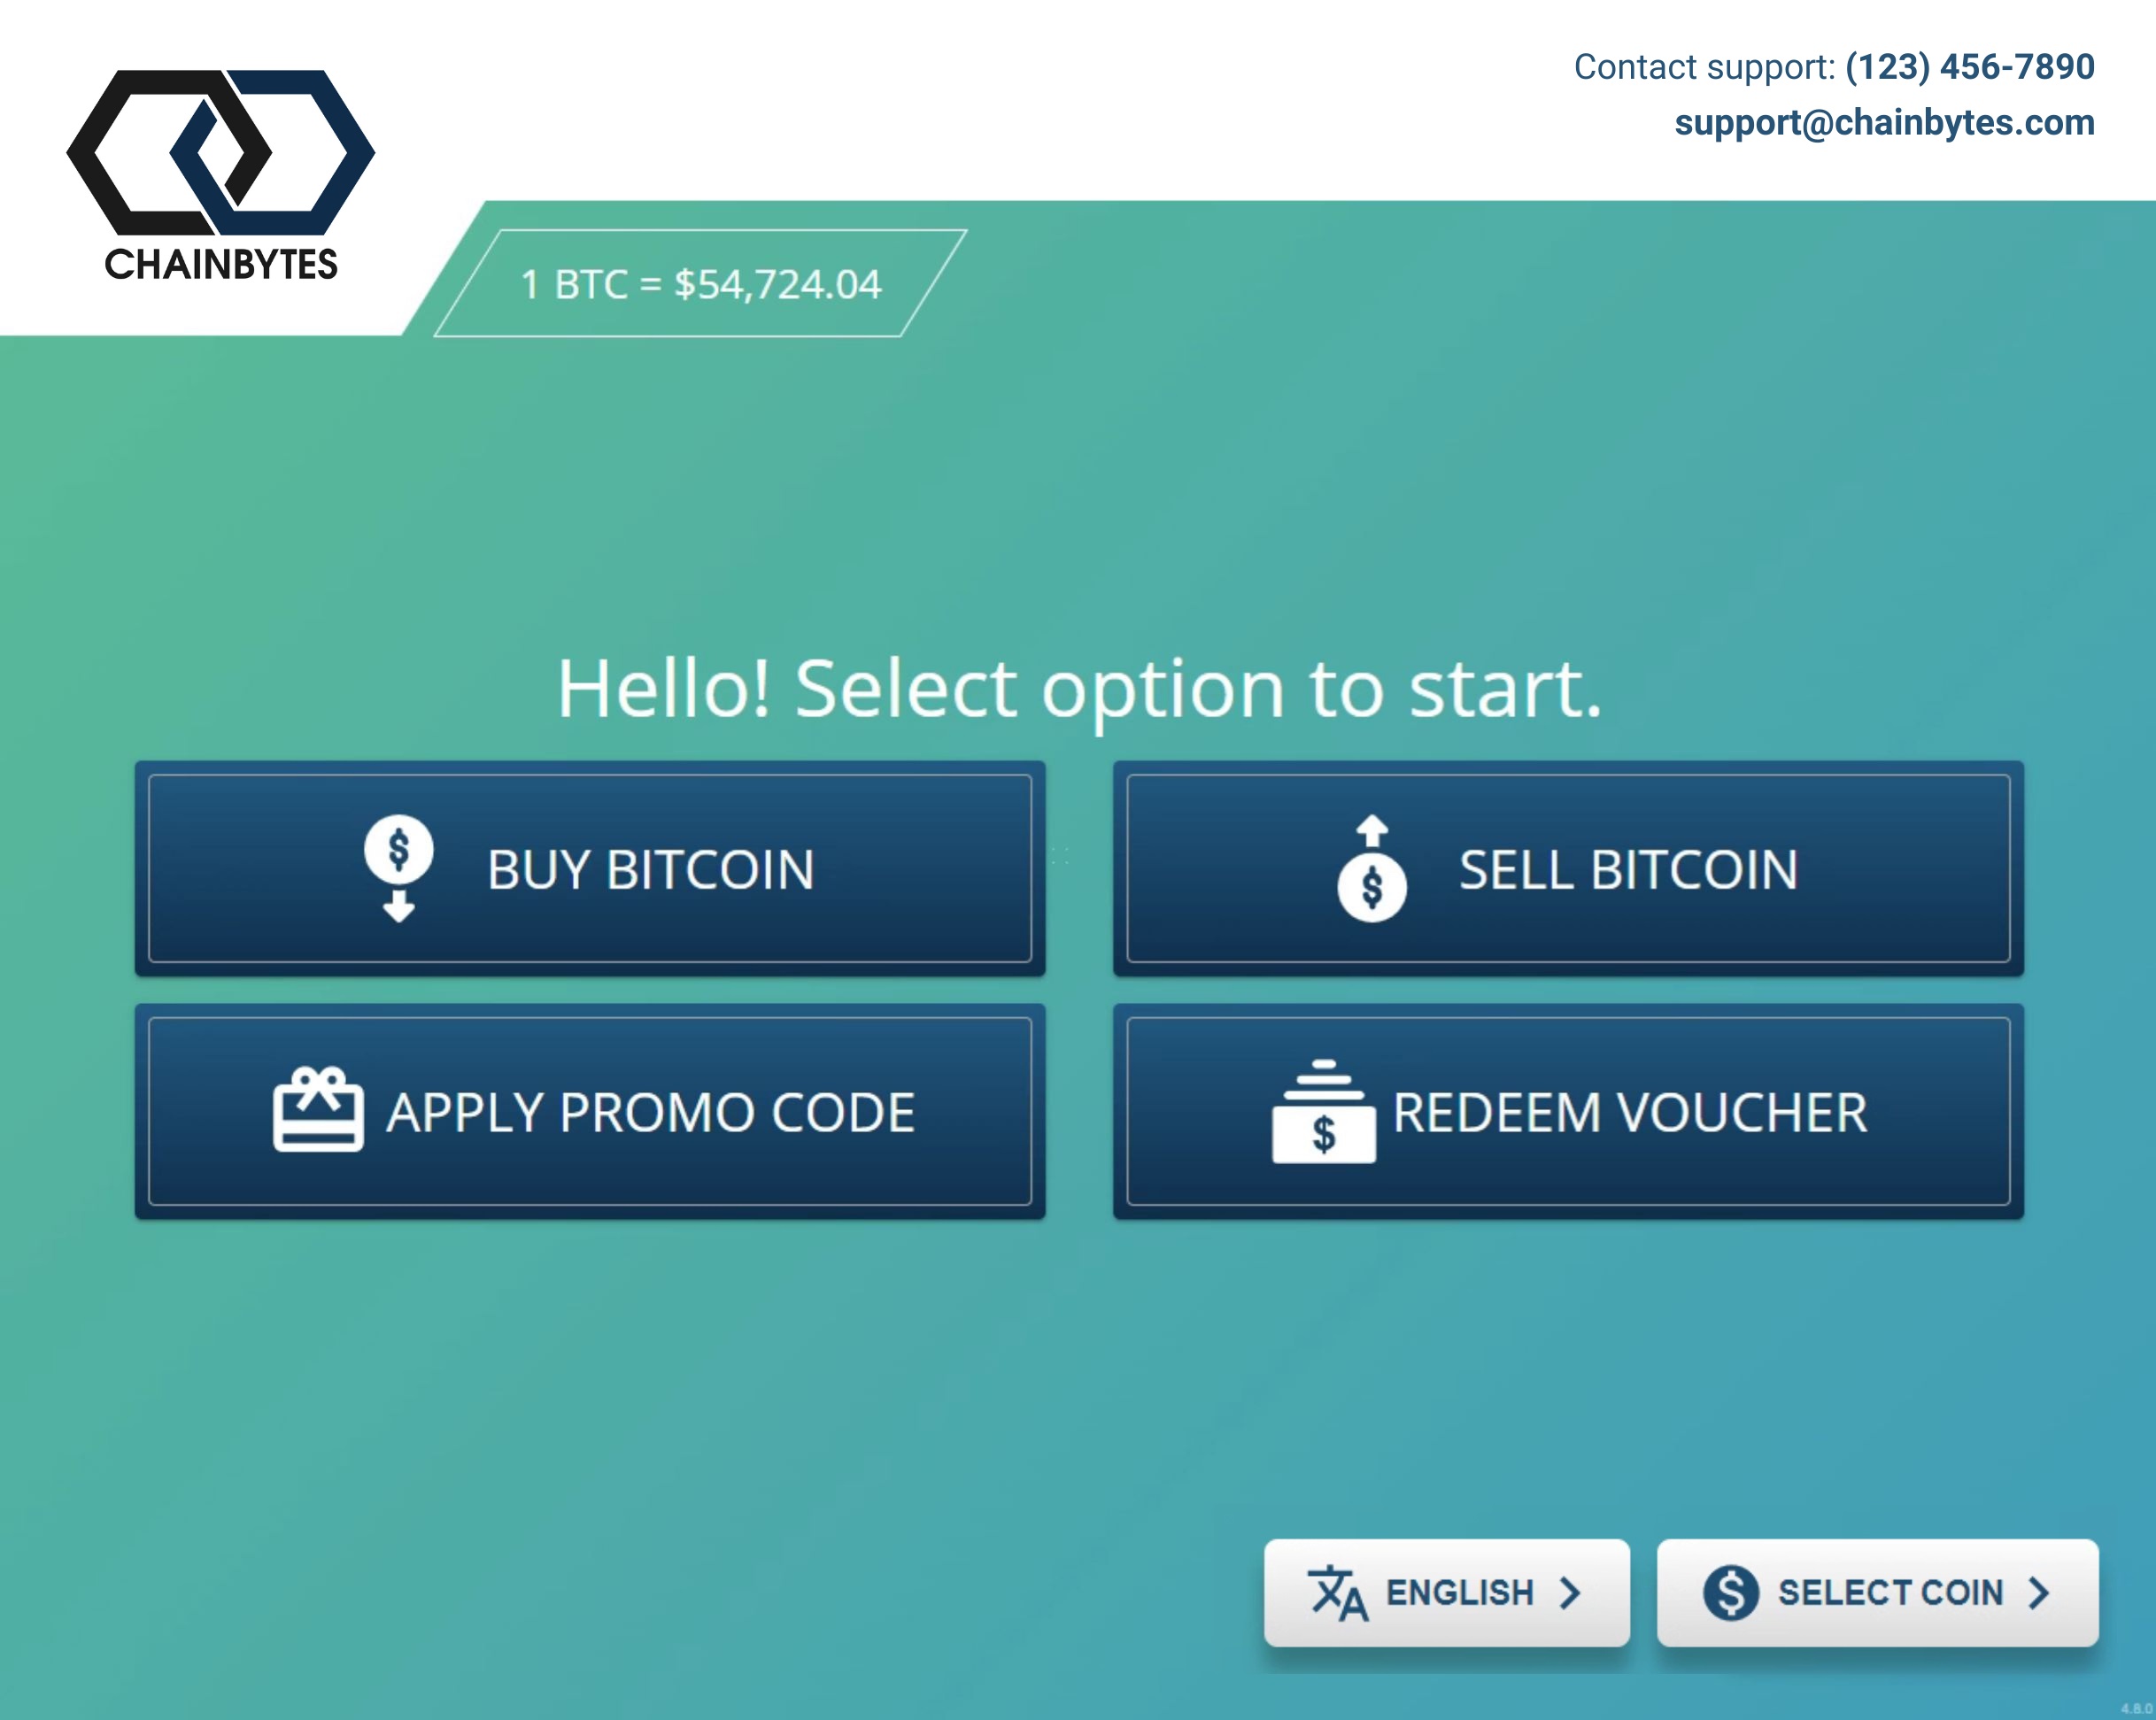 ChainBytes bitcoin ATM software for BTM kiosks